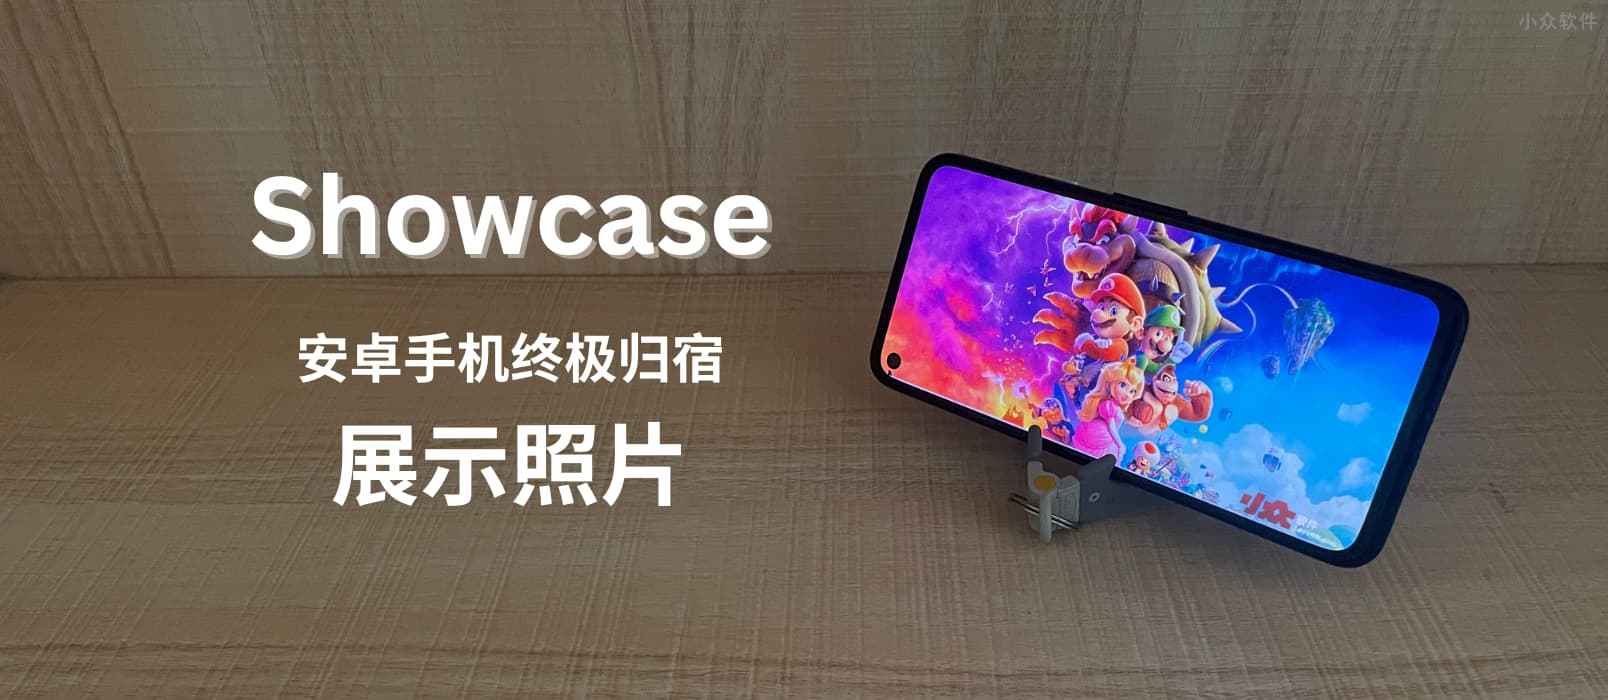 Showcase - 闲置 Android 手机的终极归宿：展示照片